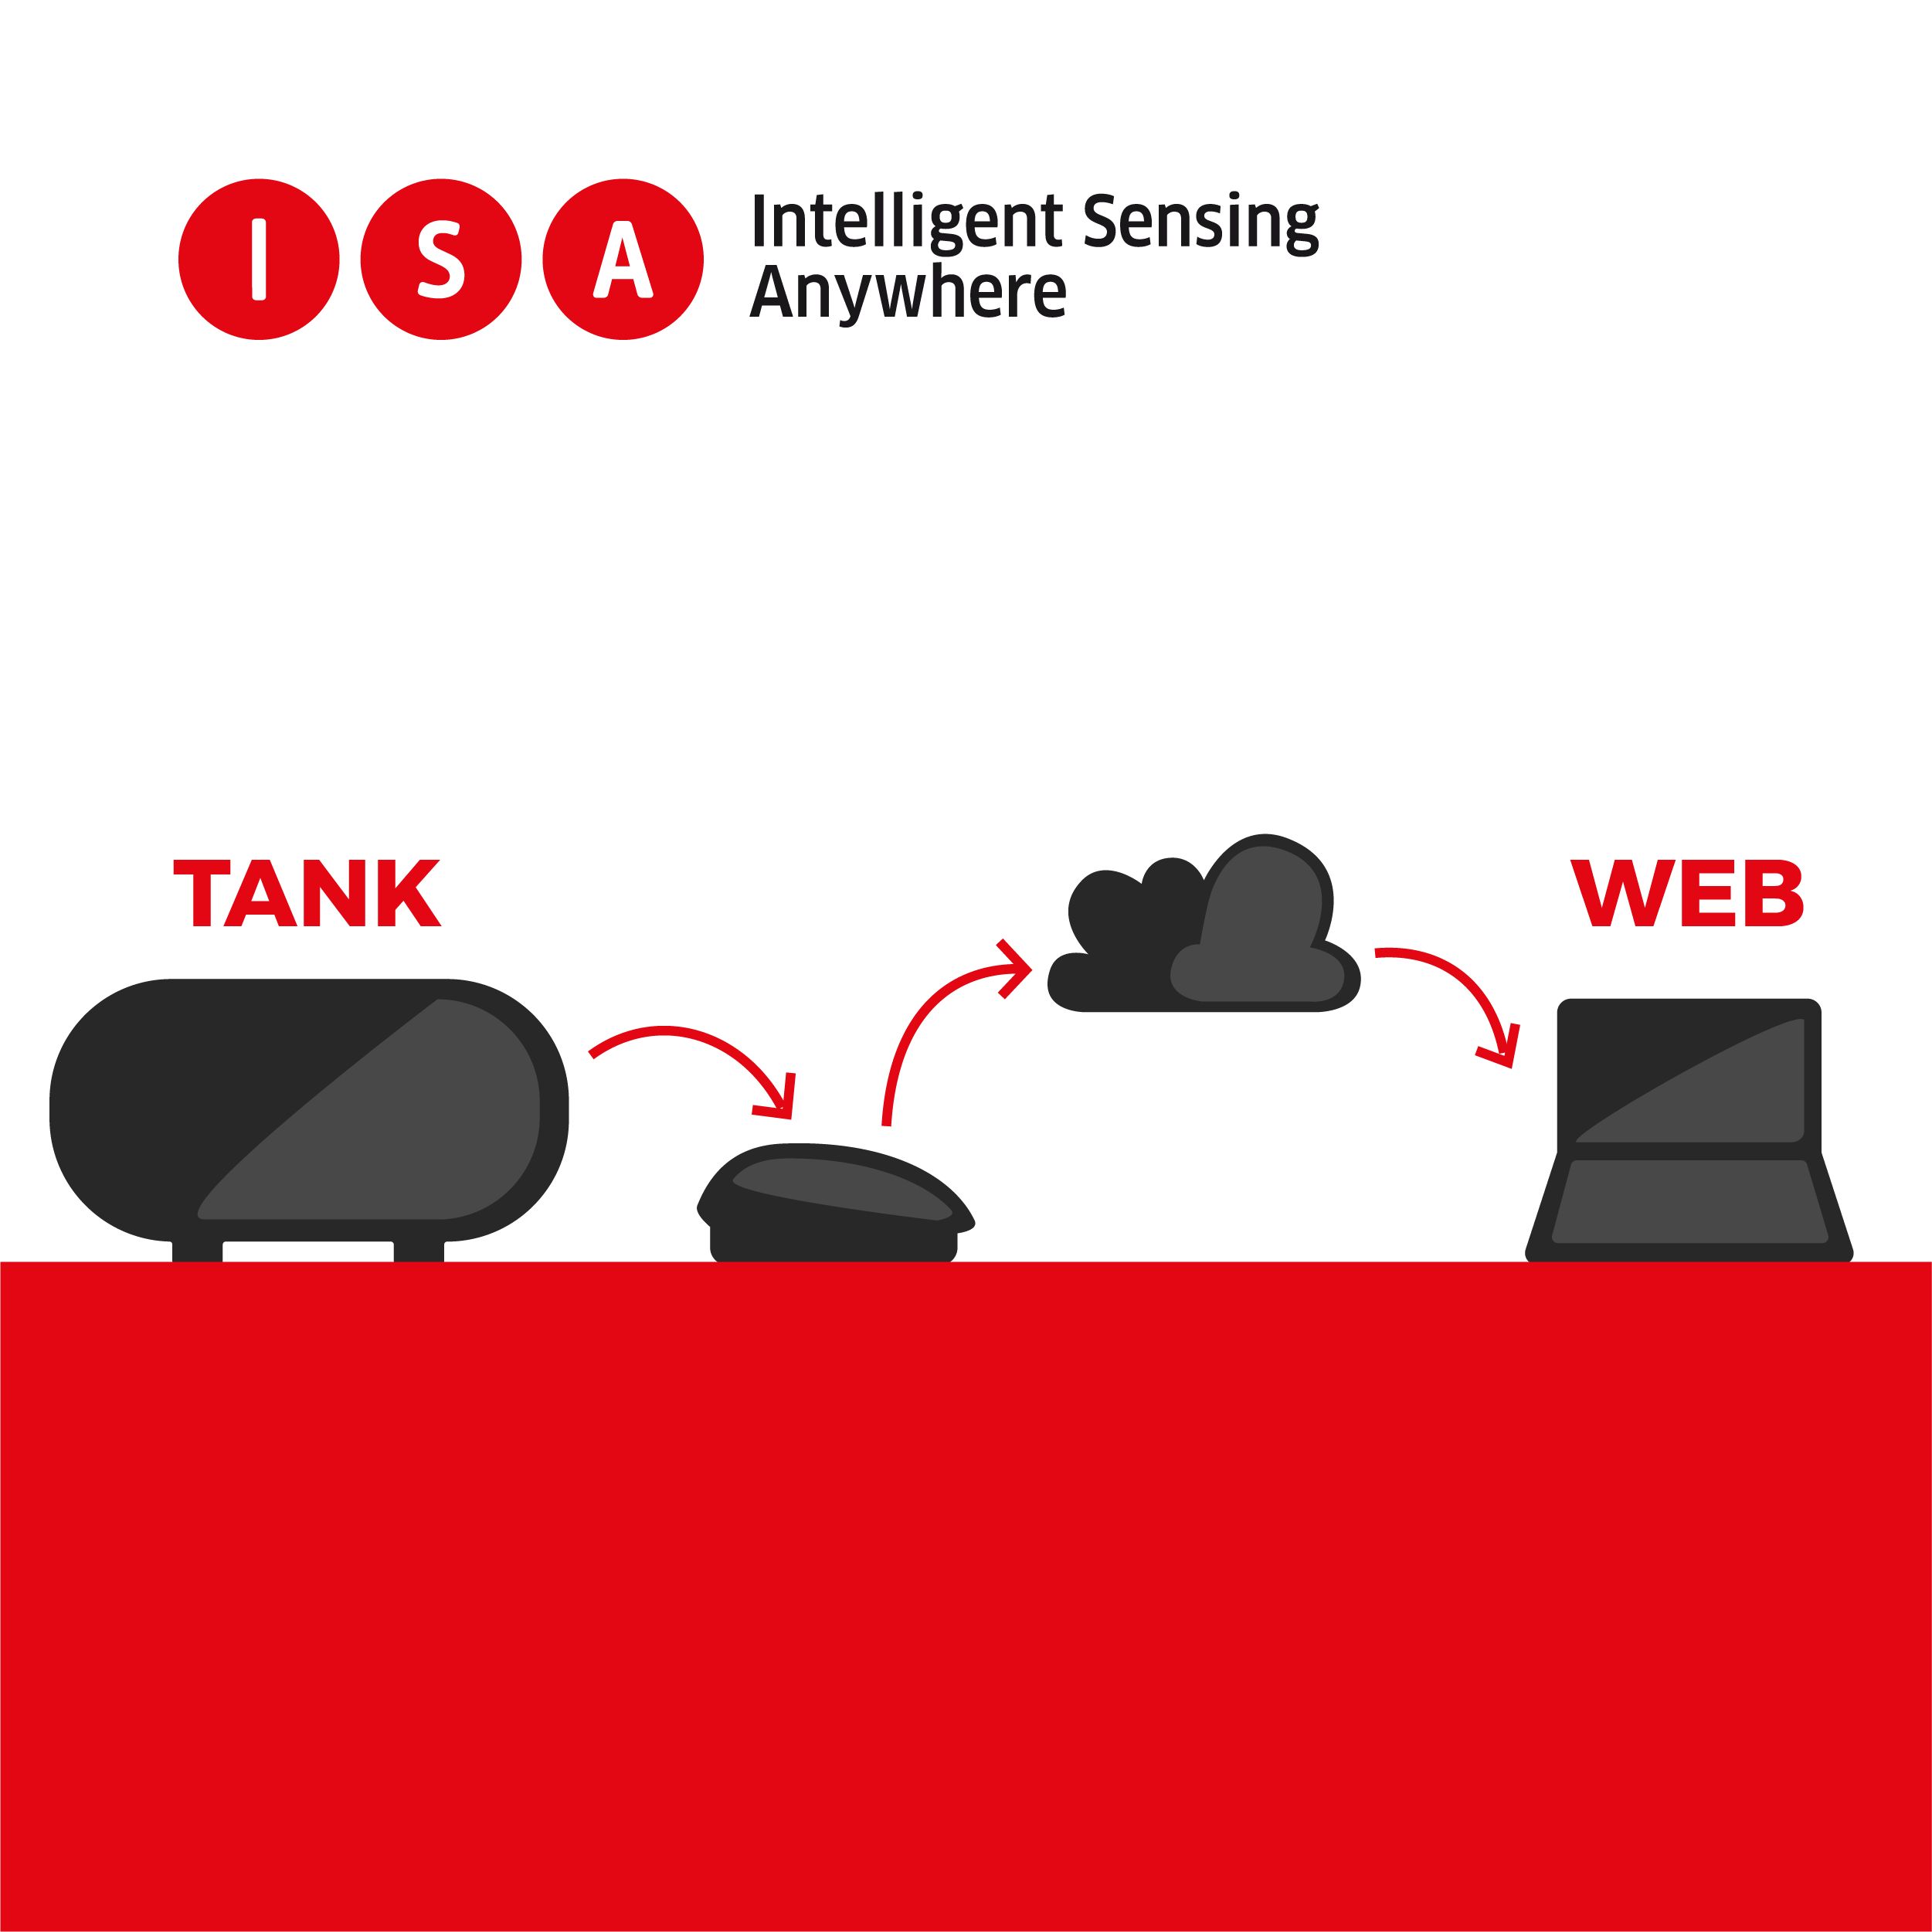 Tank Monitoring